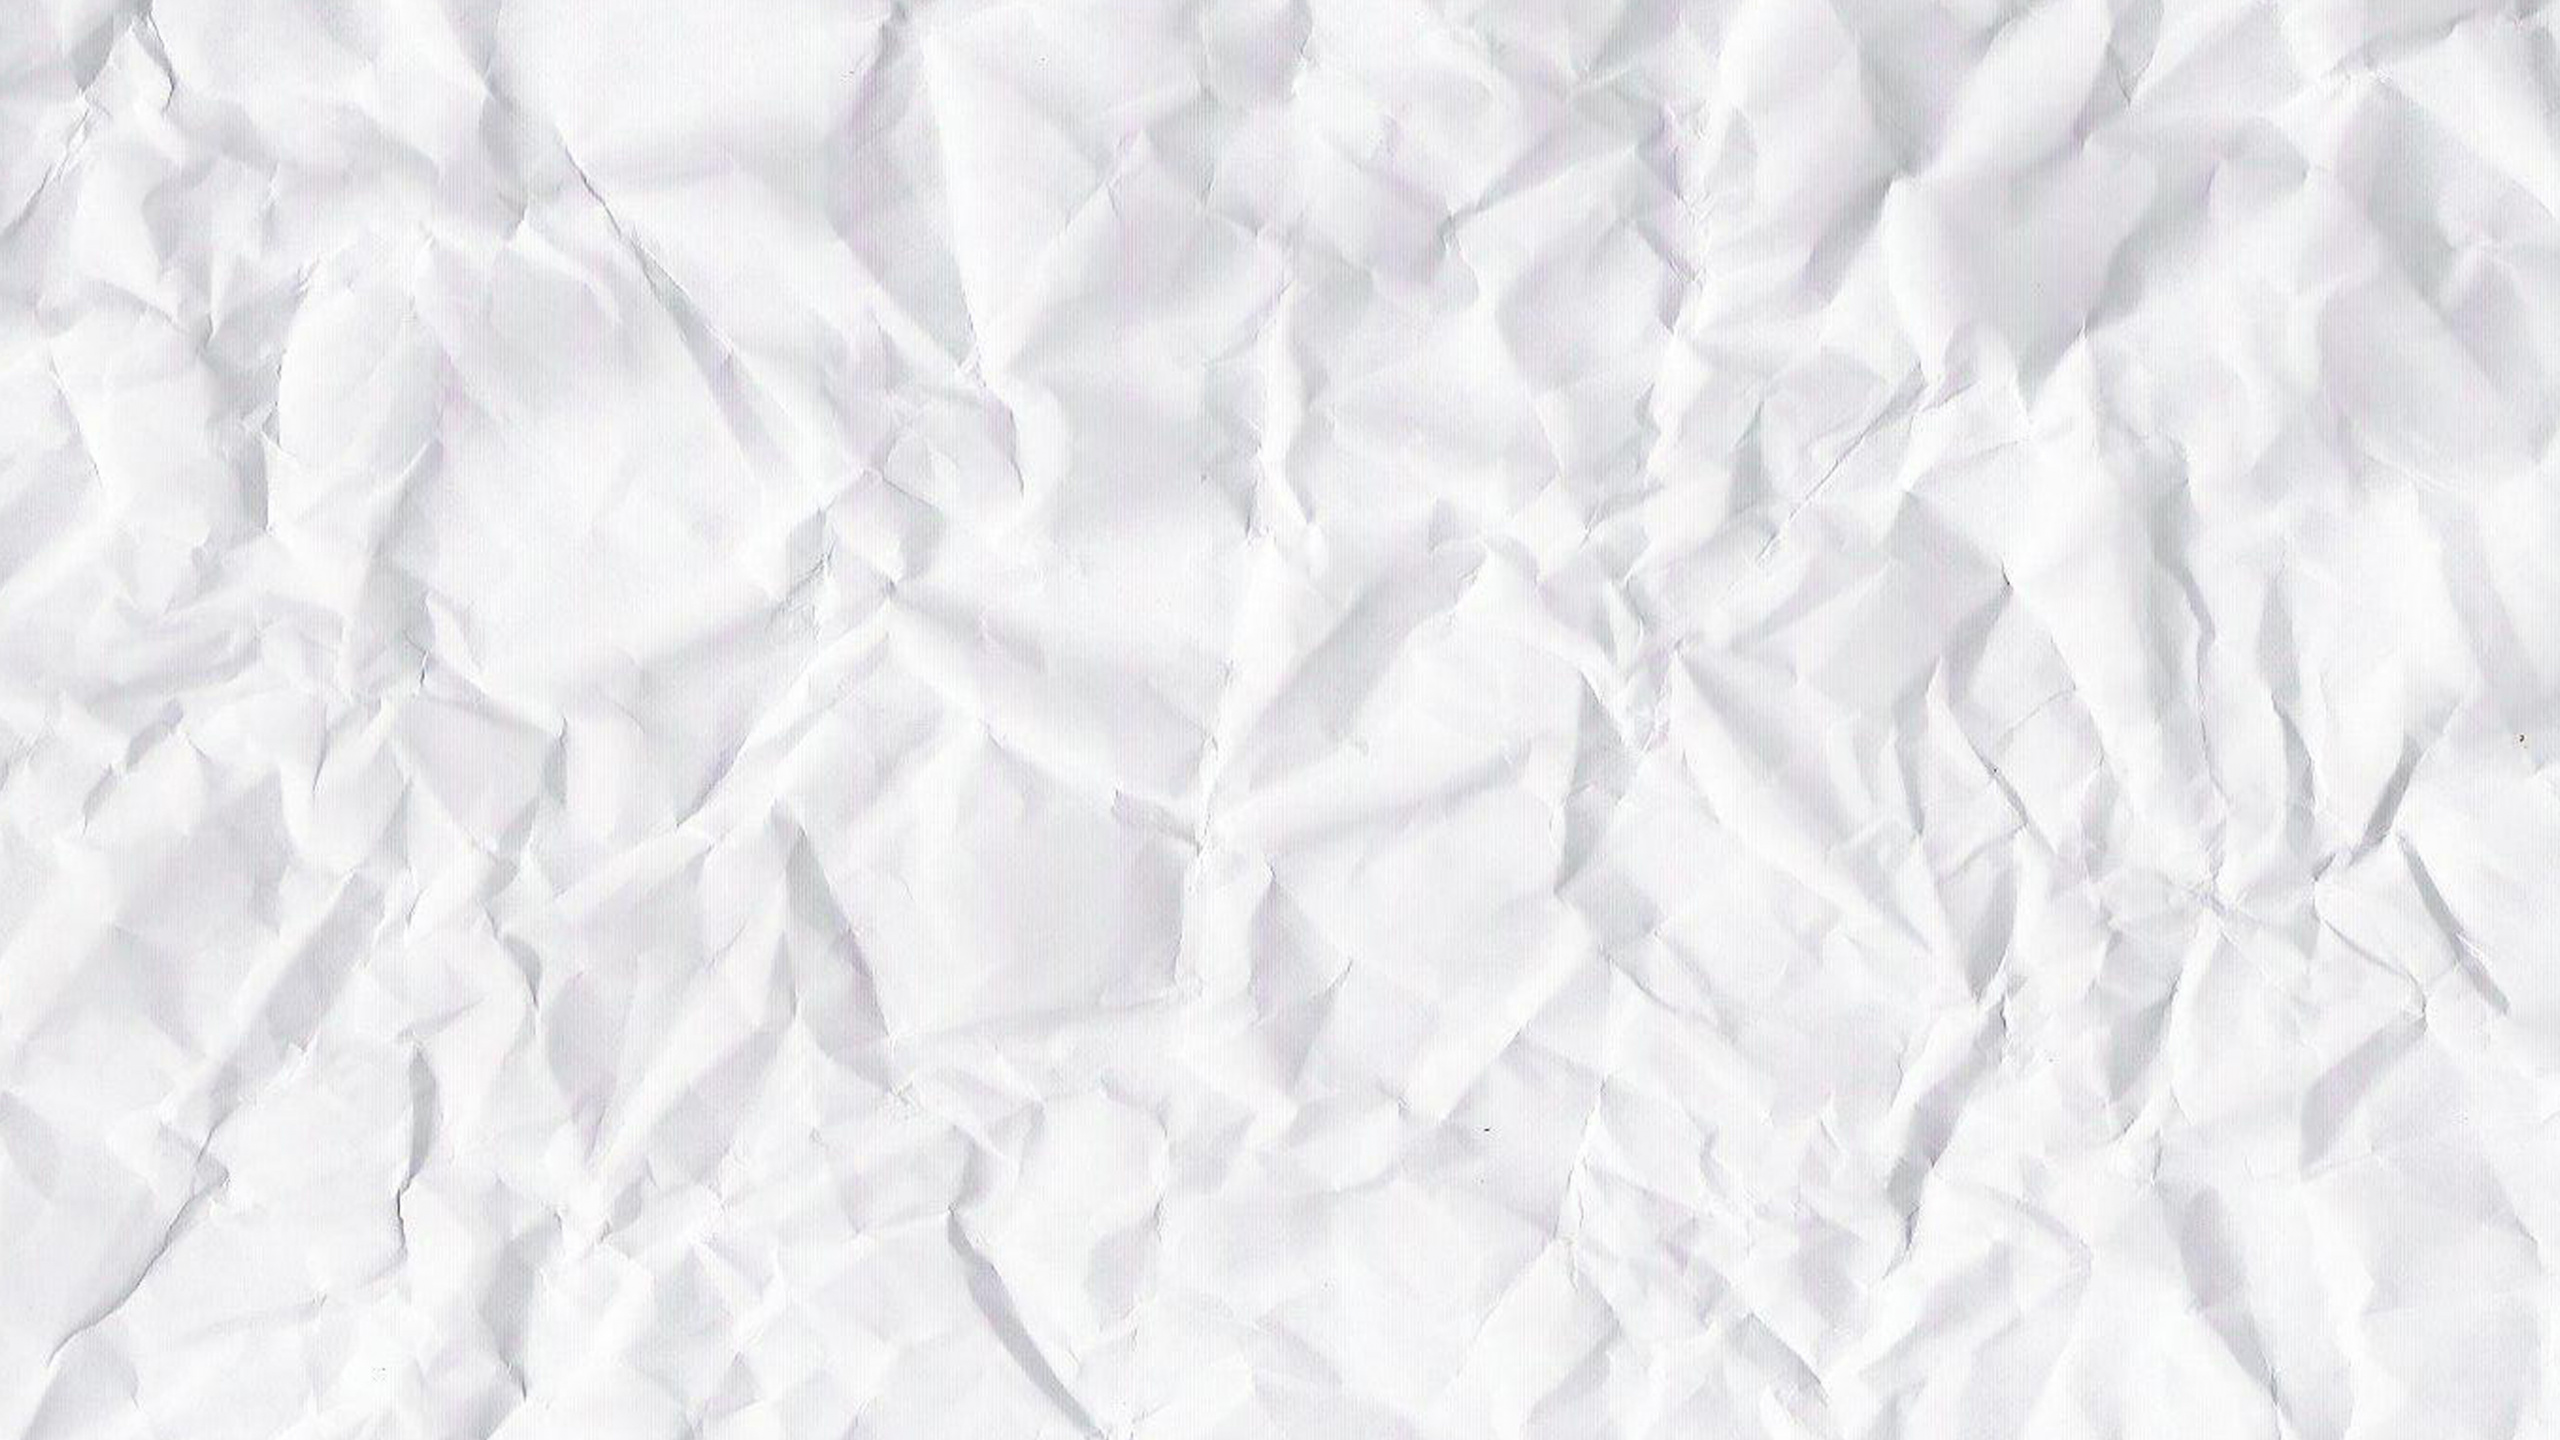 Textil Floral Blanco y Gris. Wallpaper in 2560x1440 Resolution